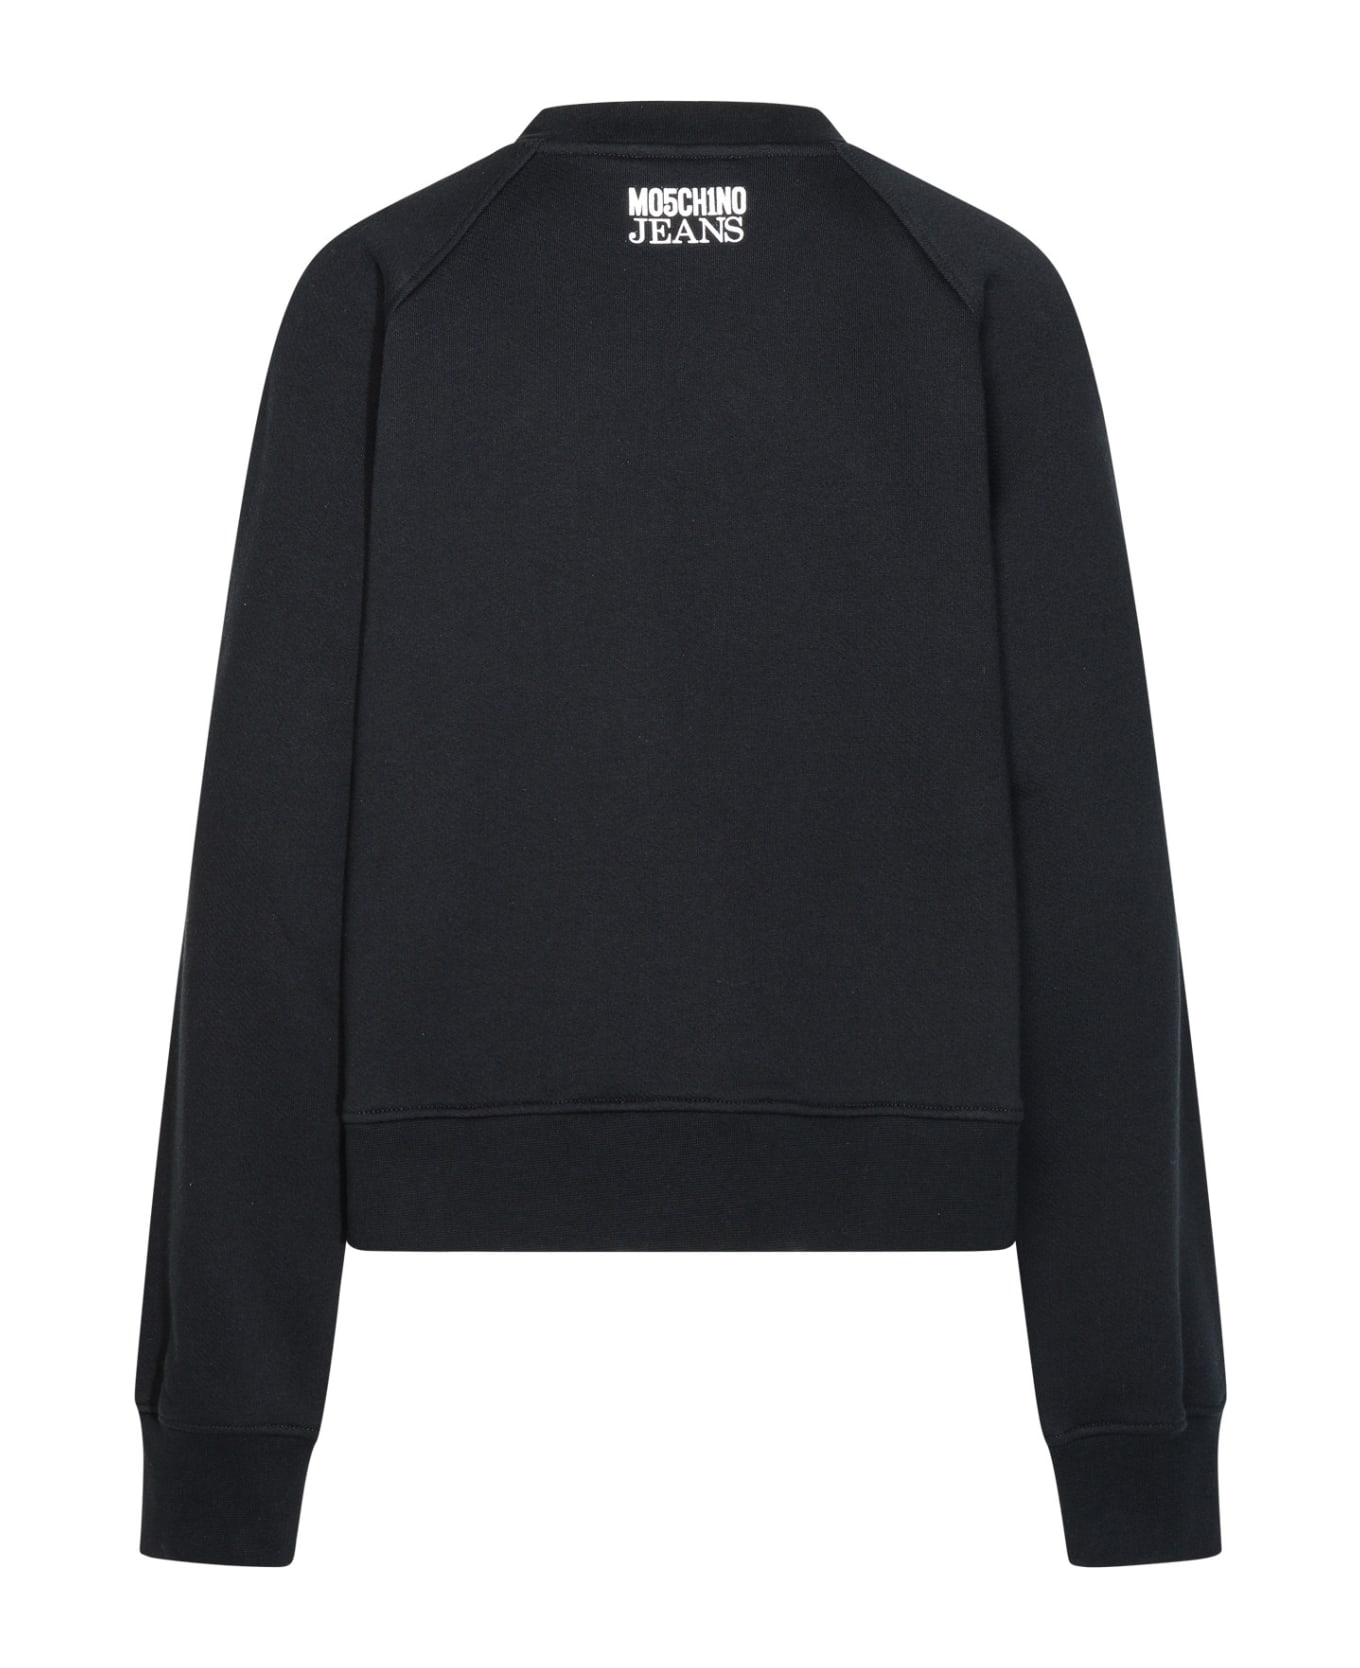 M05CH1N0 Jeans Black Cotton Sweatshirt - Black